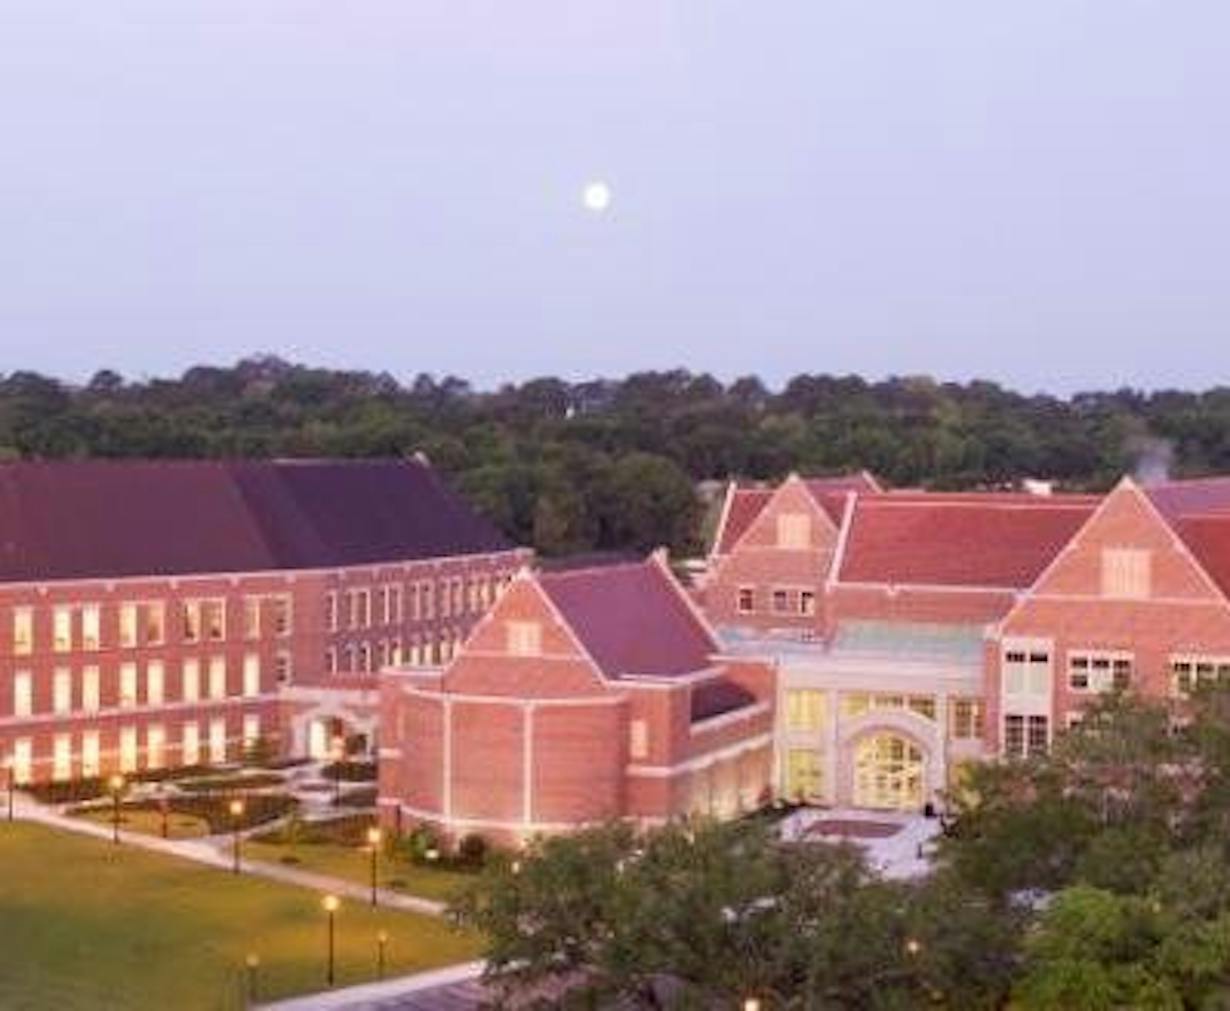 Florida State University College Of Medicine Building David Edward